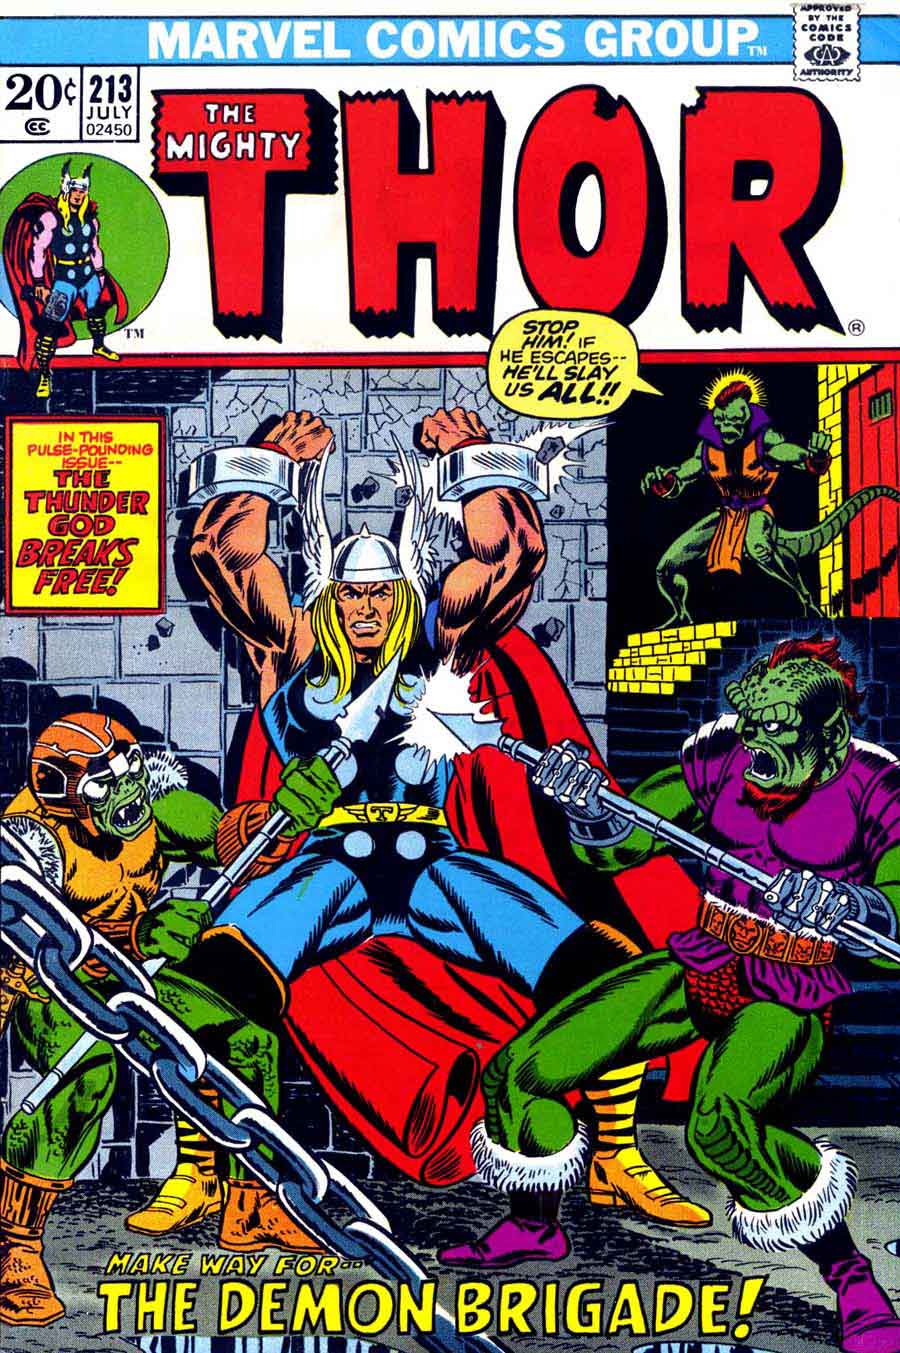 Thor v1 #213 marvel comic book cover art by Jim Starlin